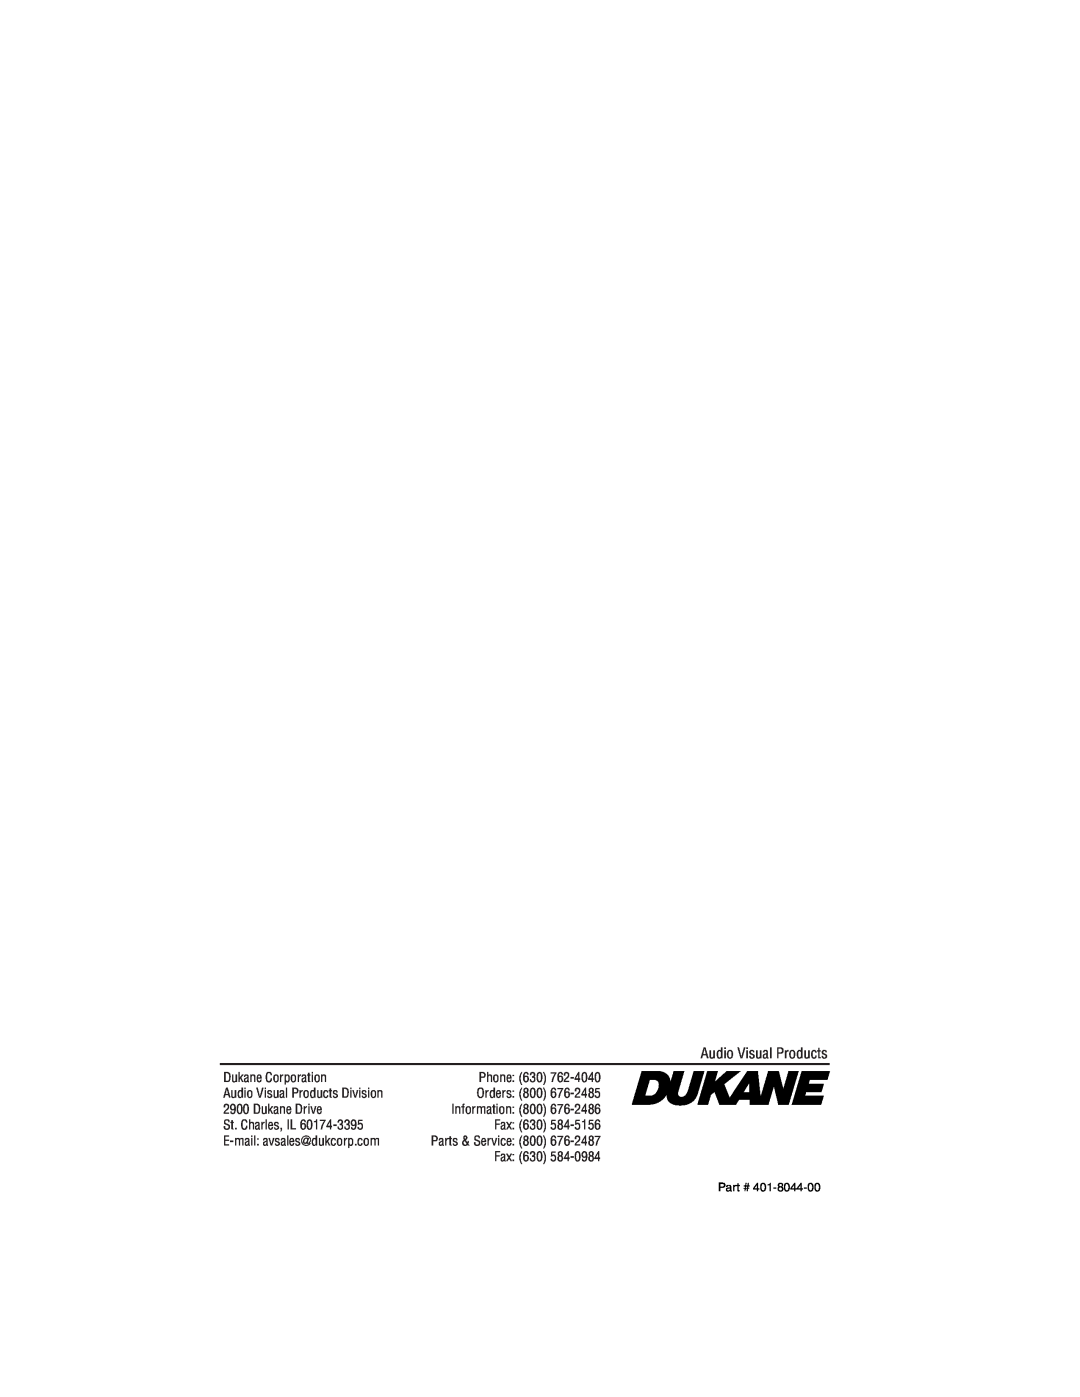 Dukane 8044 manual Audio Visual Products, Parts & Service 